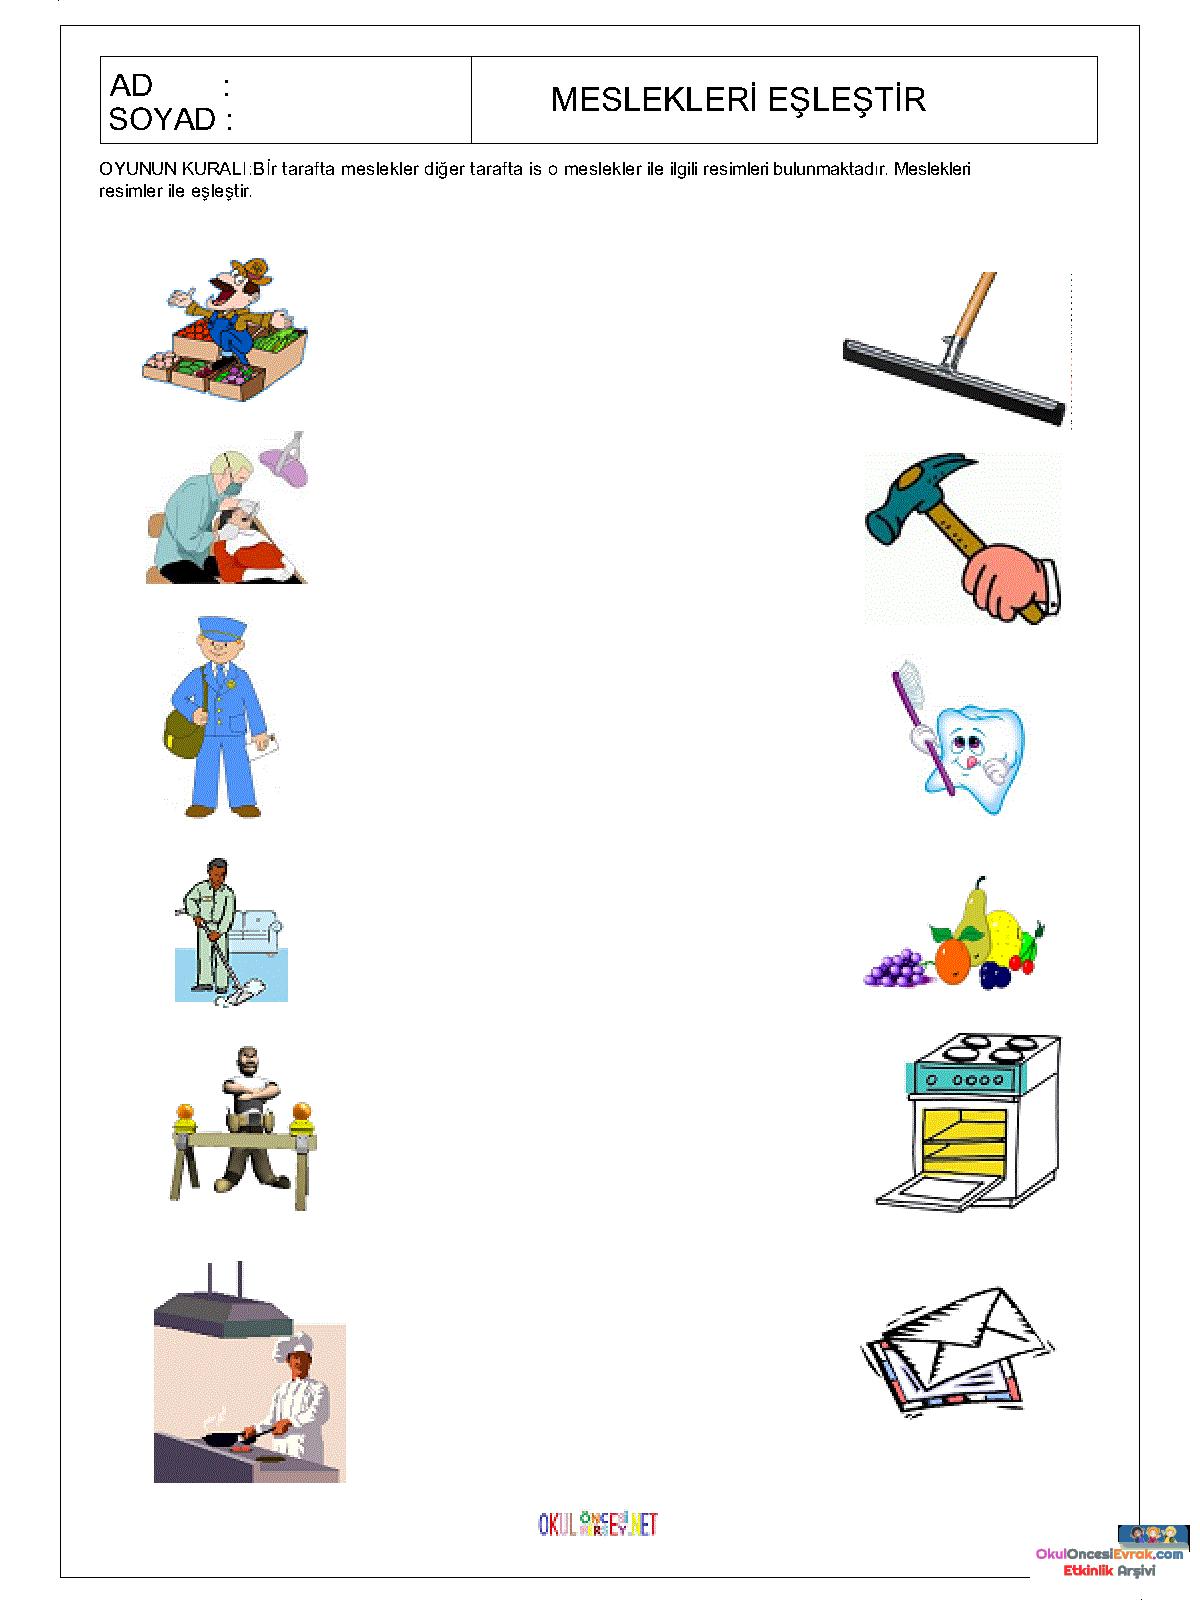 Professions matching. Профессии Worksheets. Jobs Worksheets for Kindergarten. Профессии Worksheets for Kids. Jobs and occupations Worksheets for Kids.